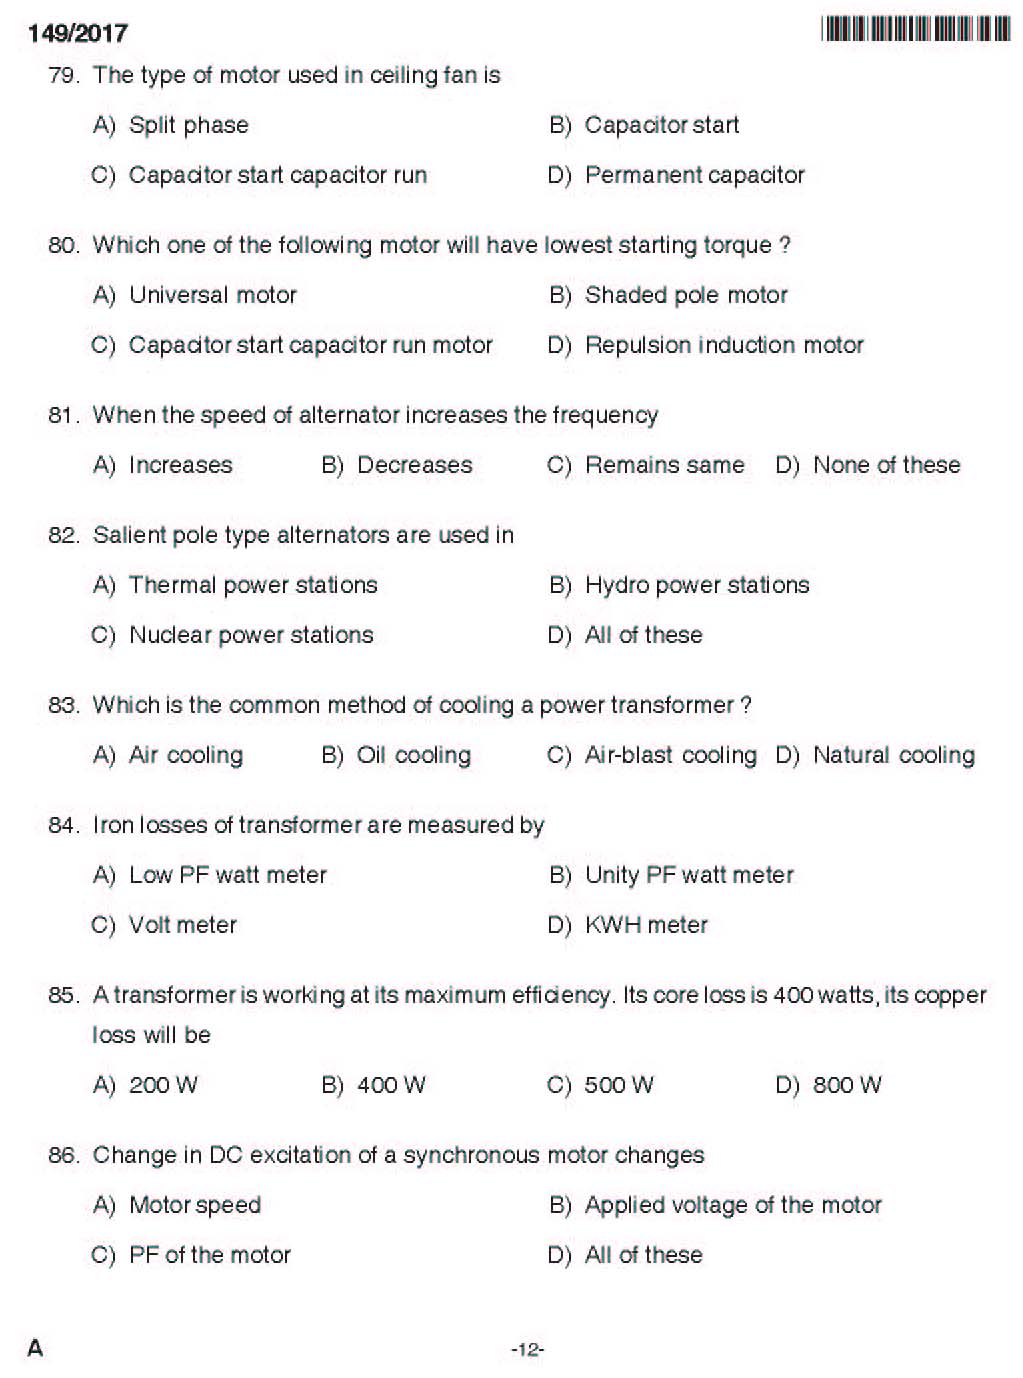 Kerala PSC Electrician Exam 2017 Question Paper Code 1492017 11